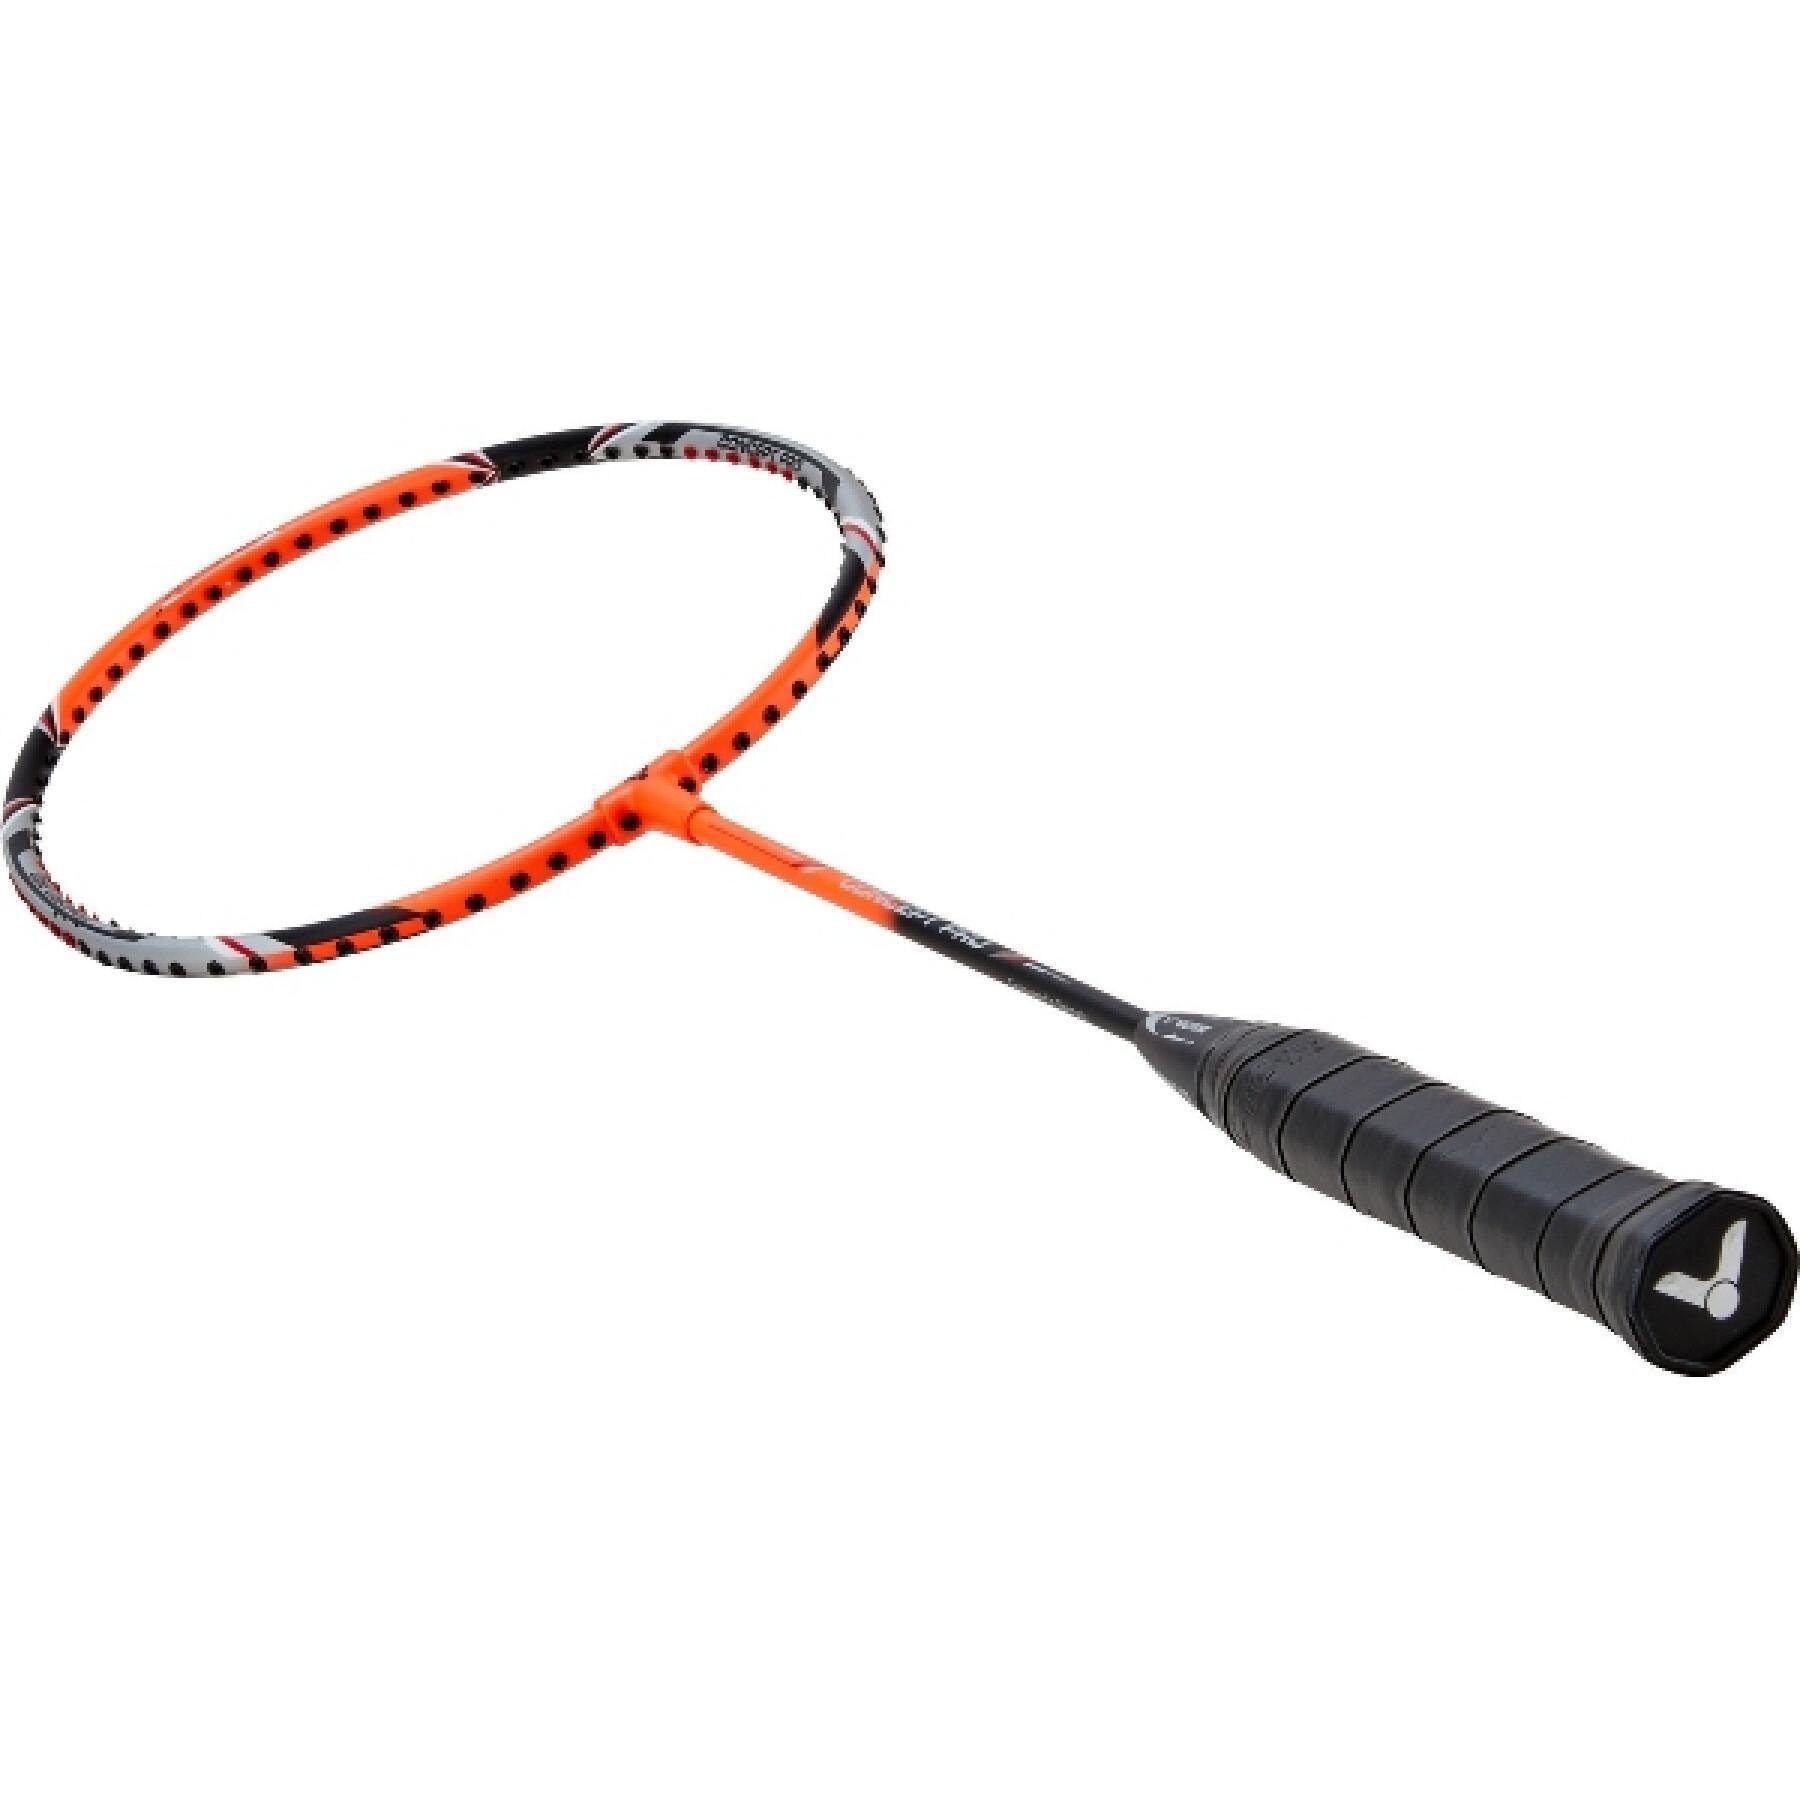 Badminton racket Victor Pro